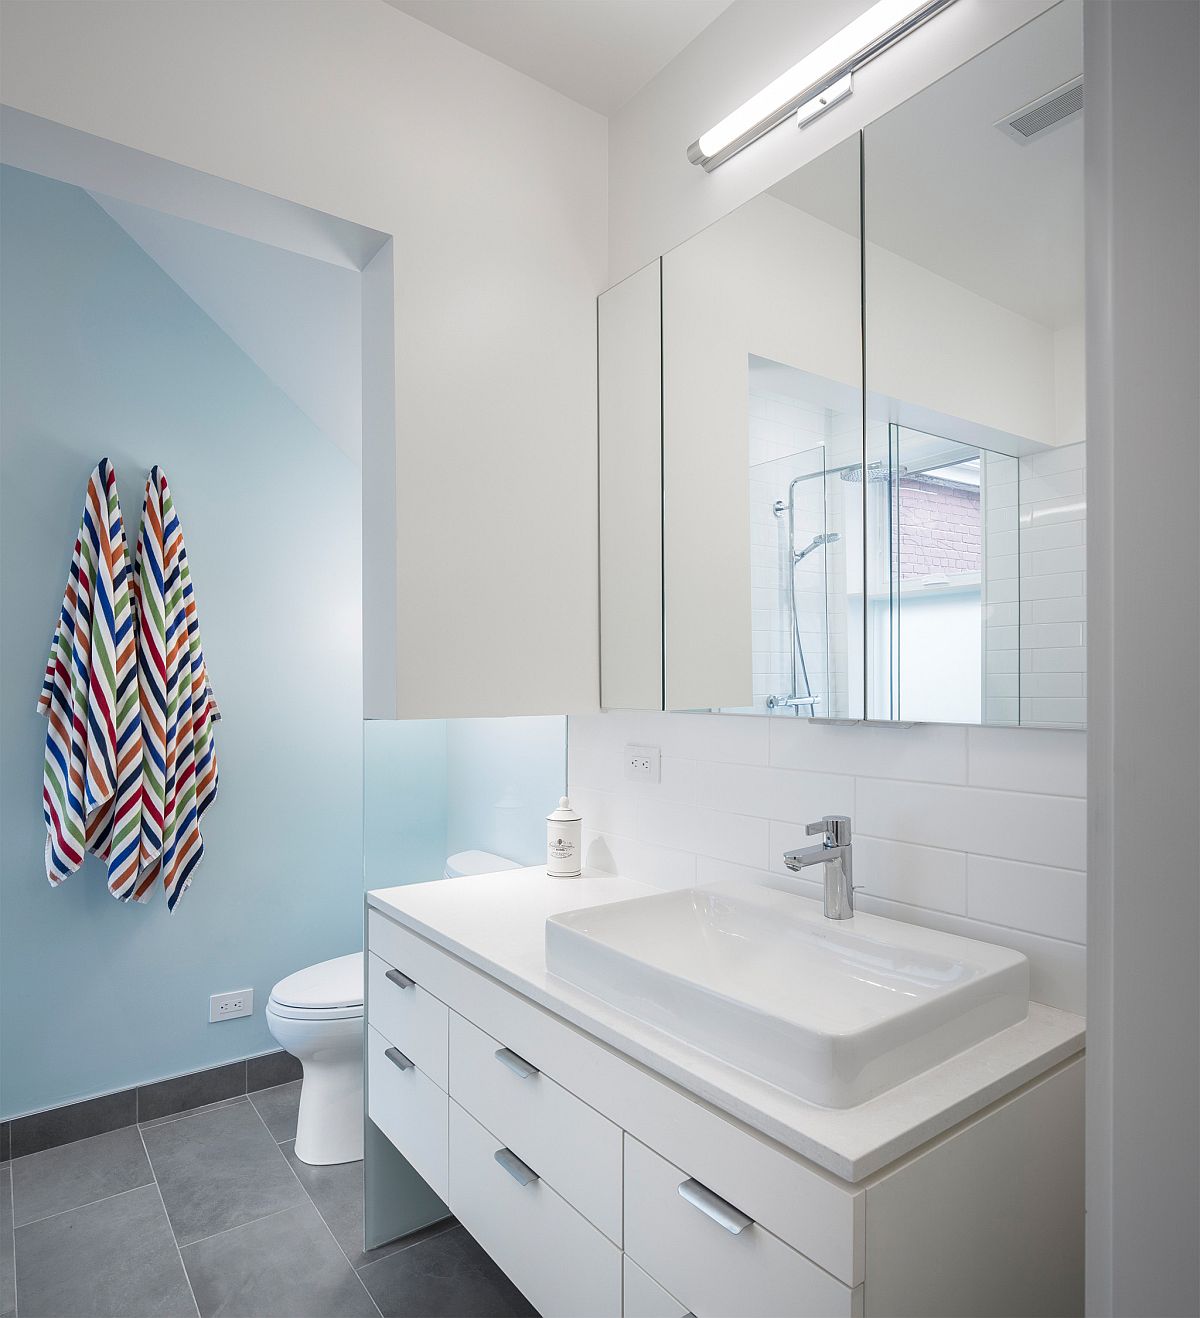 Contemporary-bathroom-in-light-blue-and-white-inside-modern-Toronto-home-37528